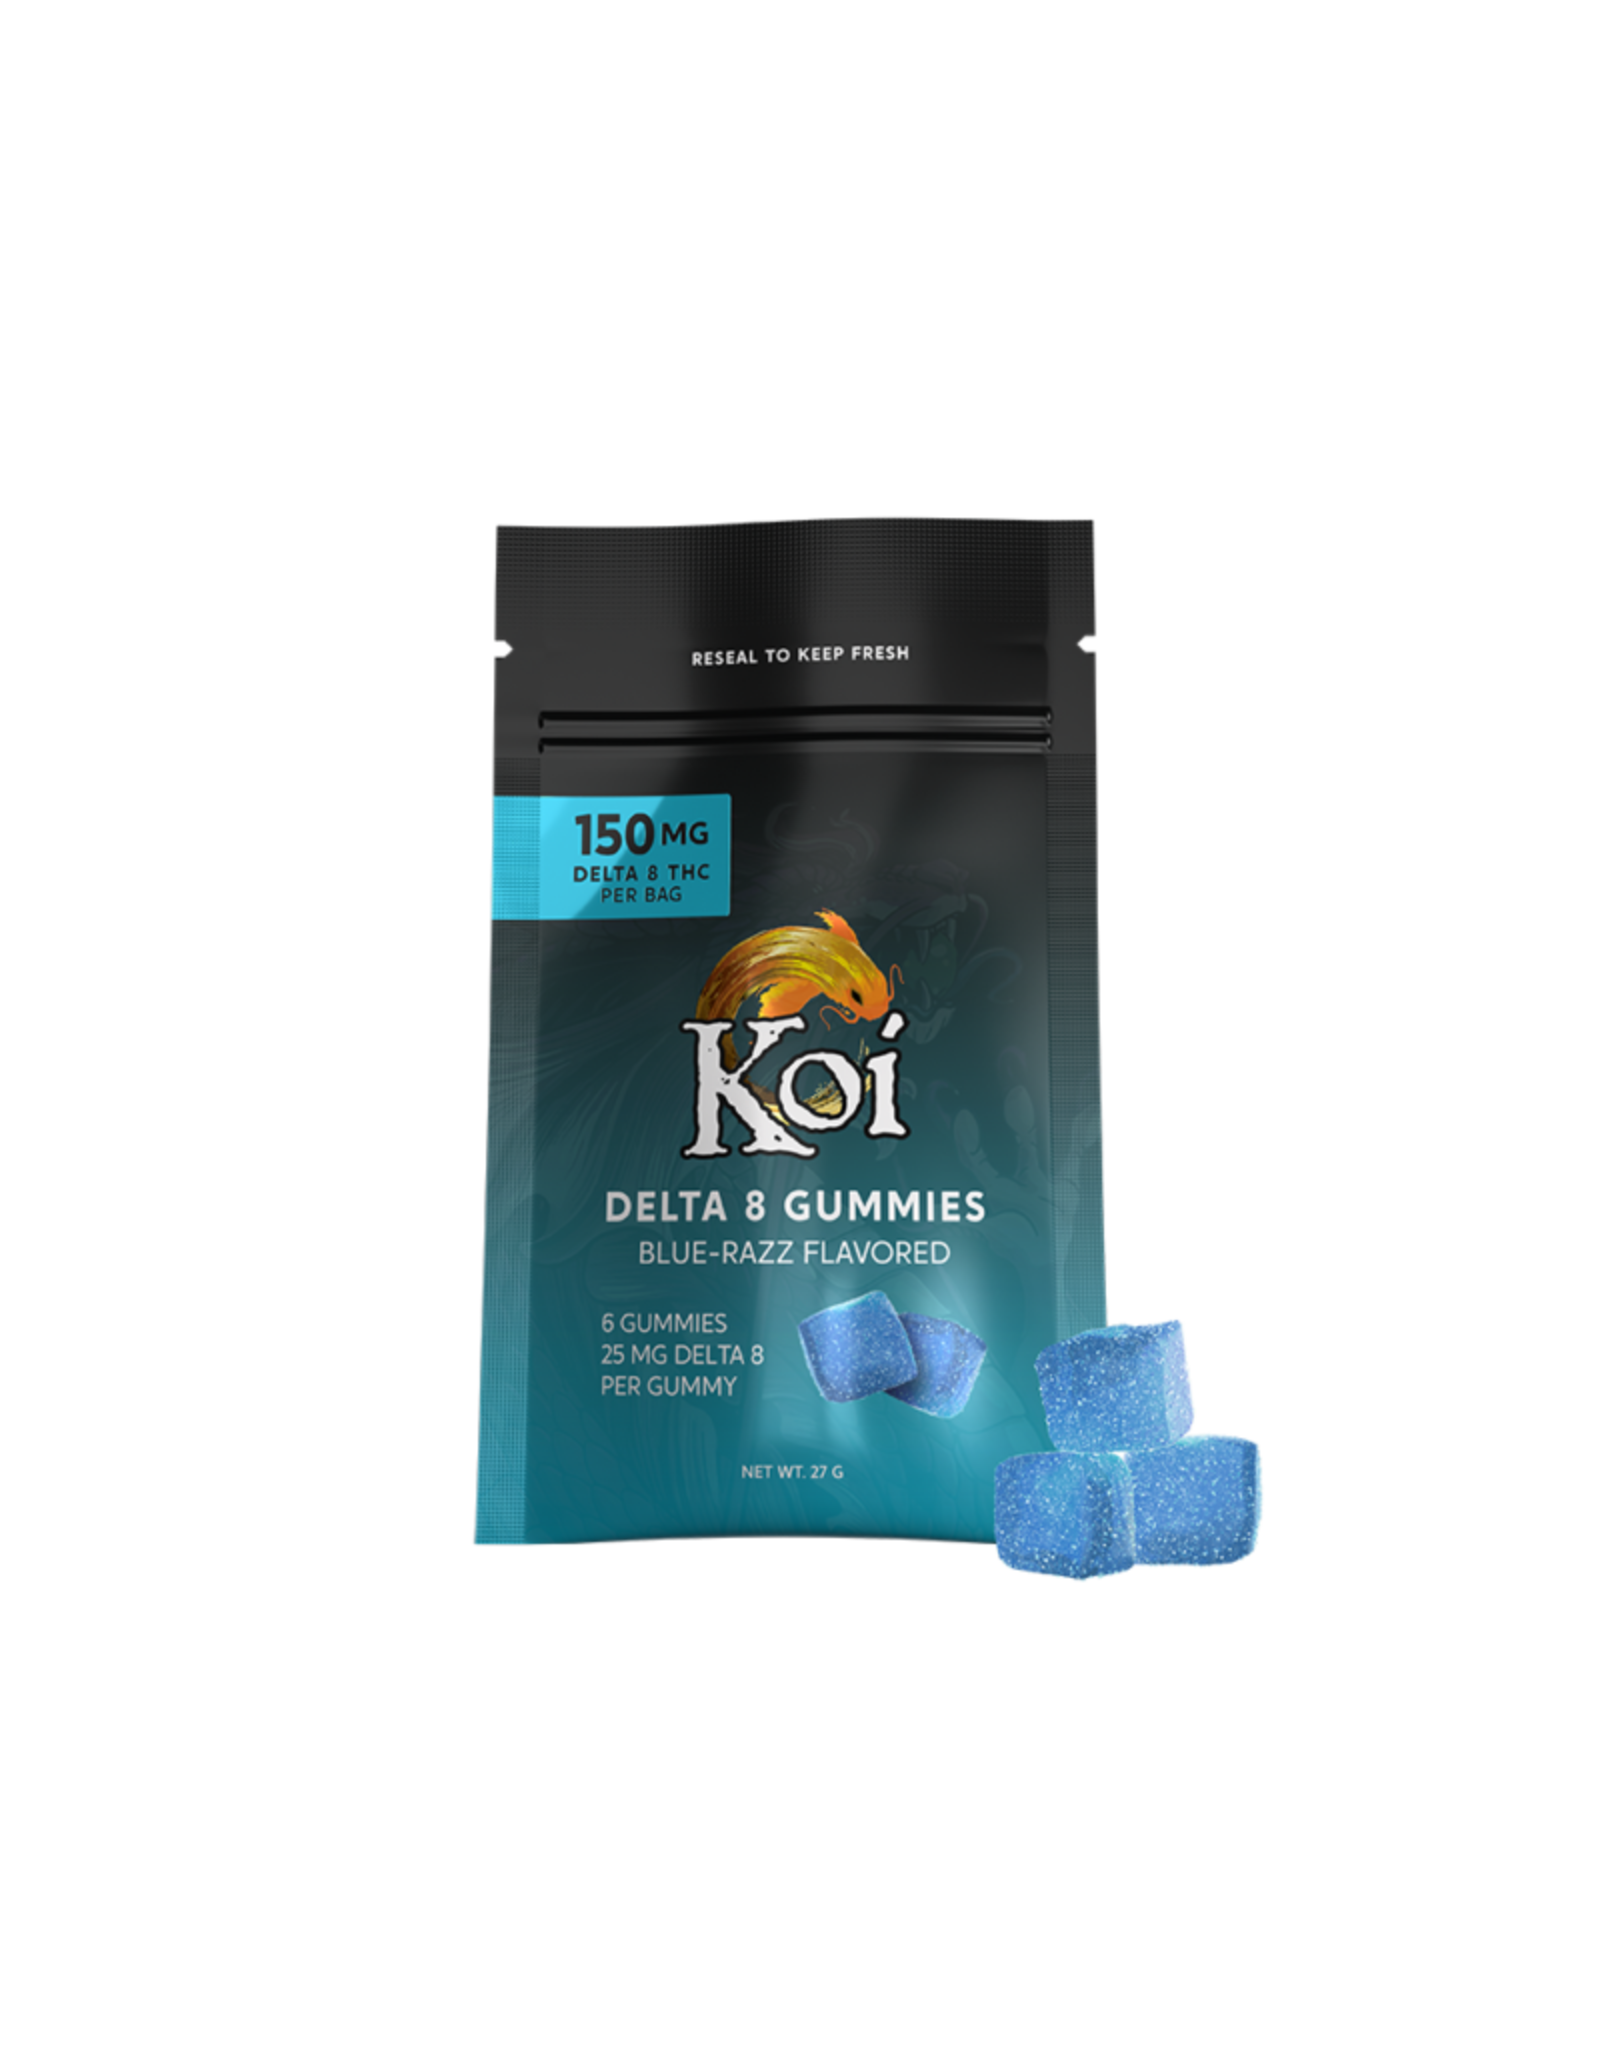 Koi Delta 8 Gummies by Koi CBD – 25mg per Gummy (20 Pack) 500mg Total